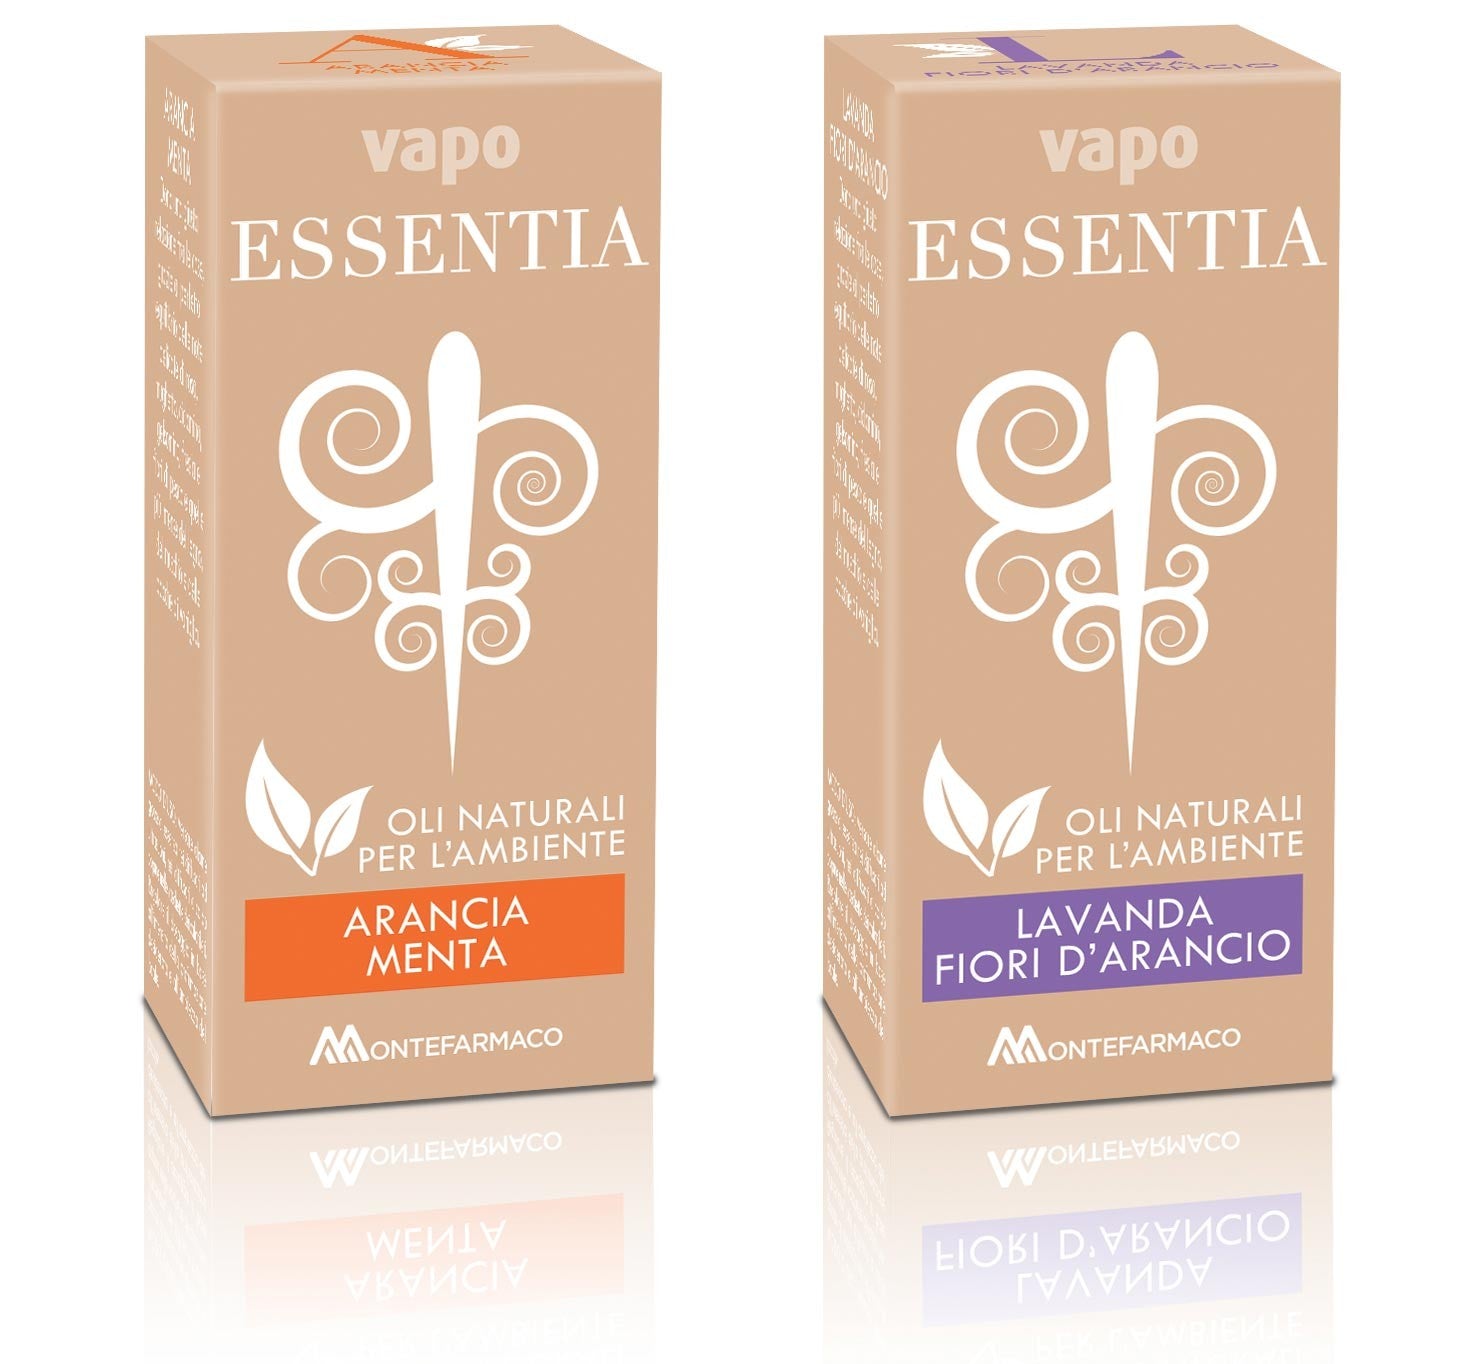 Vapo Essentia Home Fragrance Orange and Mint